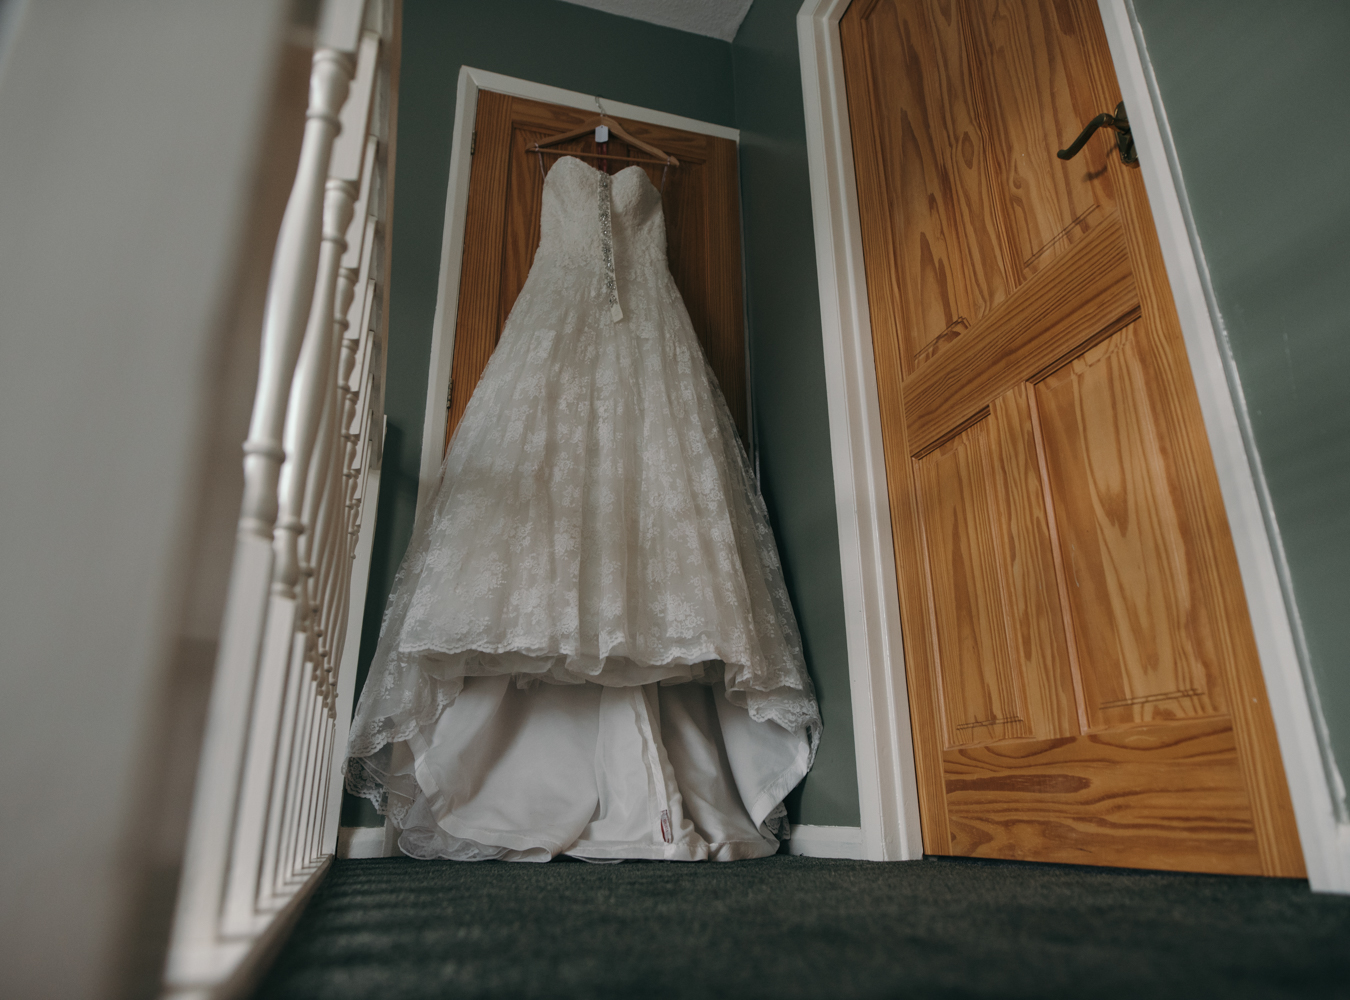 Brides dress hanging in the hallway